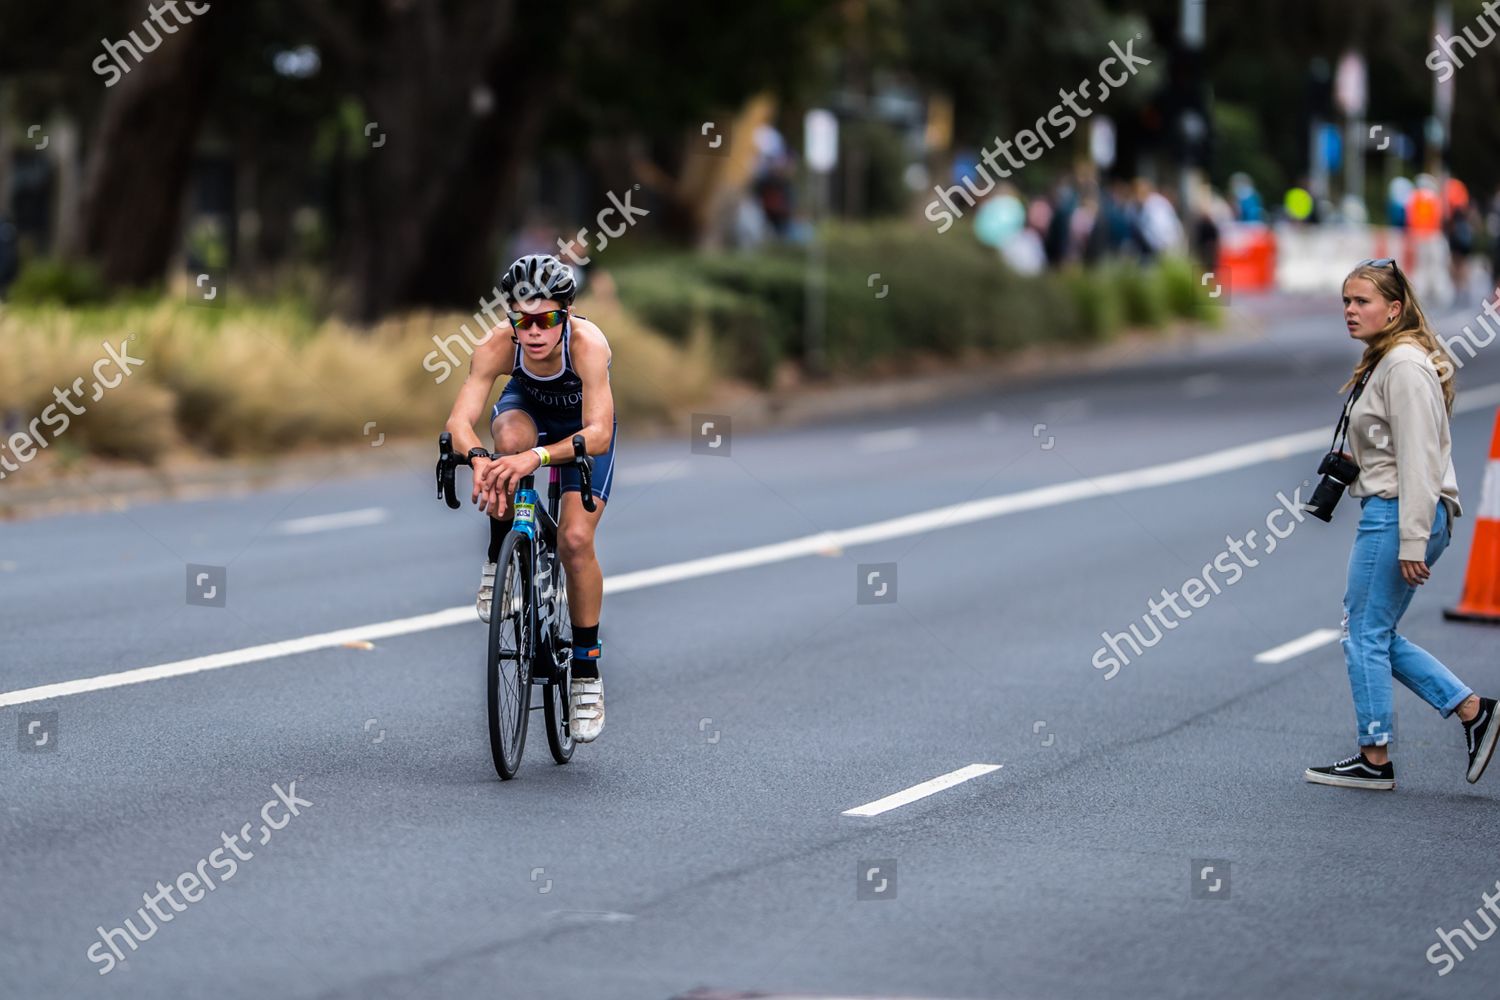 SOPA Images - Gallery - 2XU Triathlon Series in Melbourne, Australia